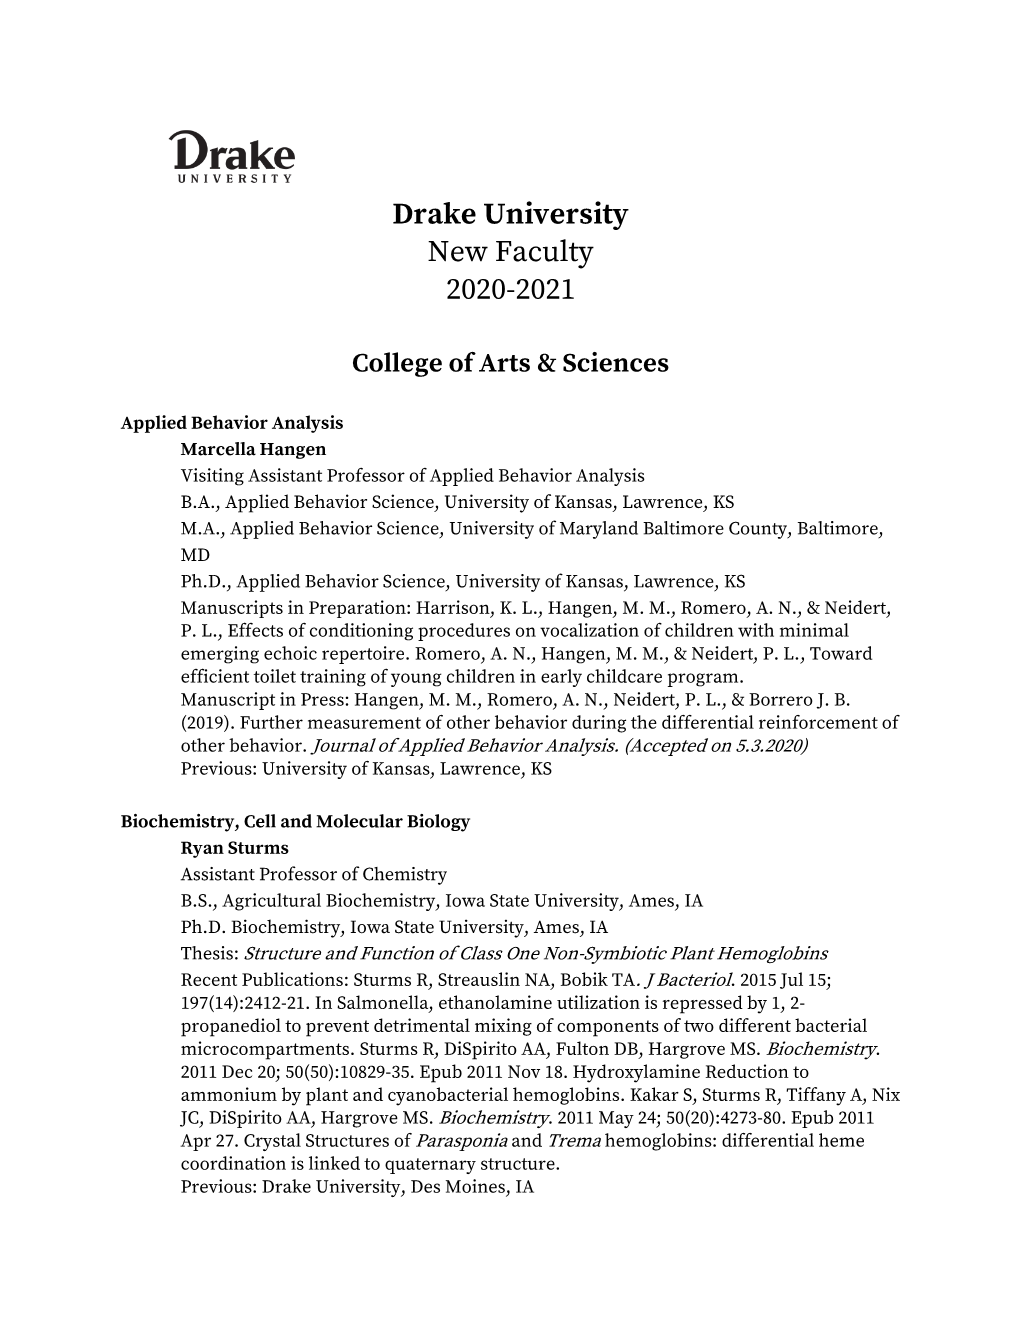 Drake University New Faculty 2020-2021